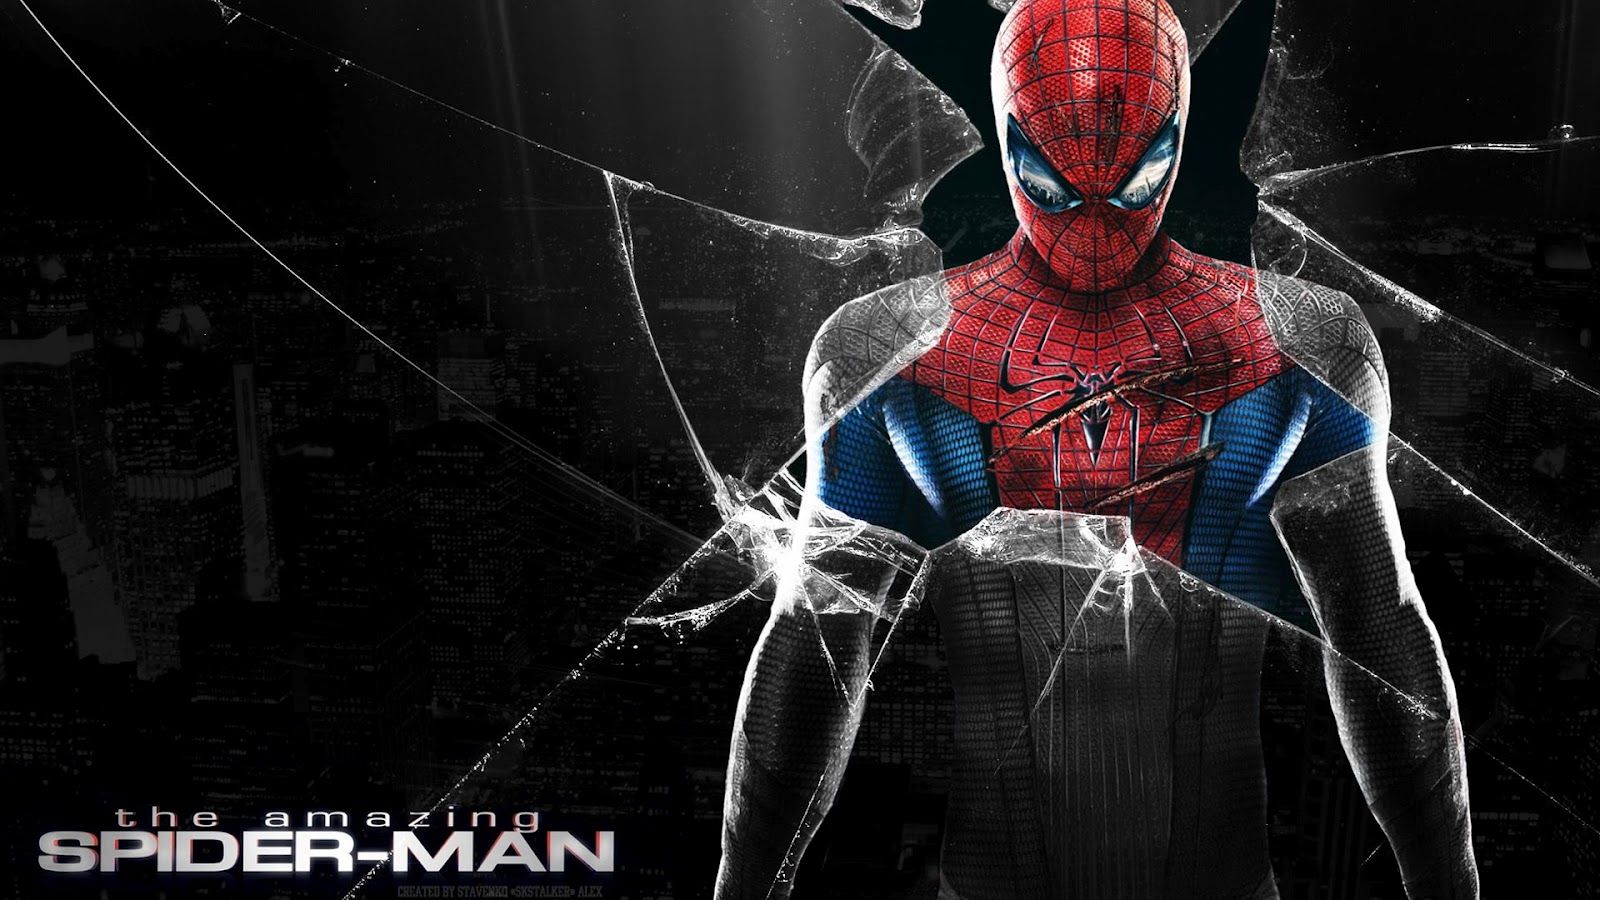 Wallpaper Spiderman 3 Hd – wallpaper202